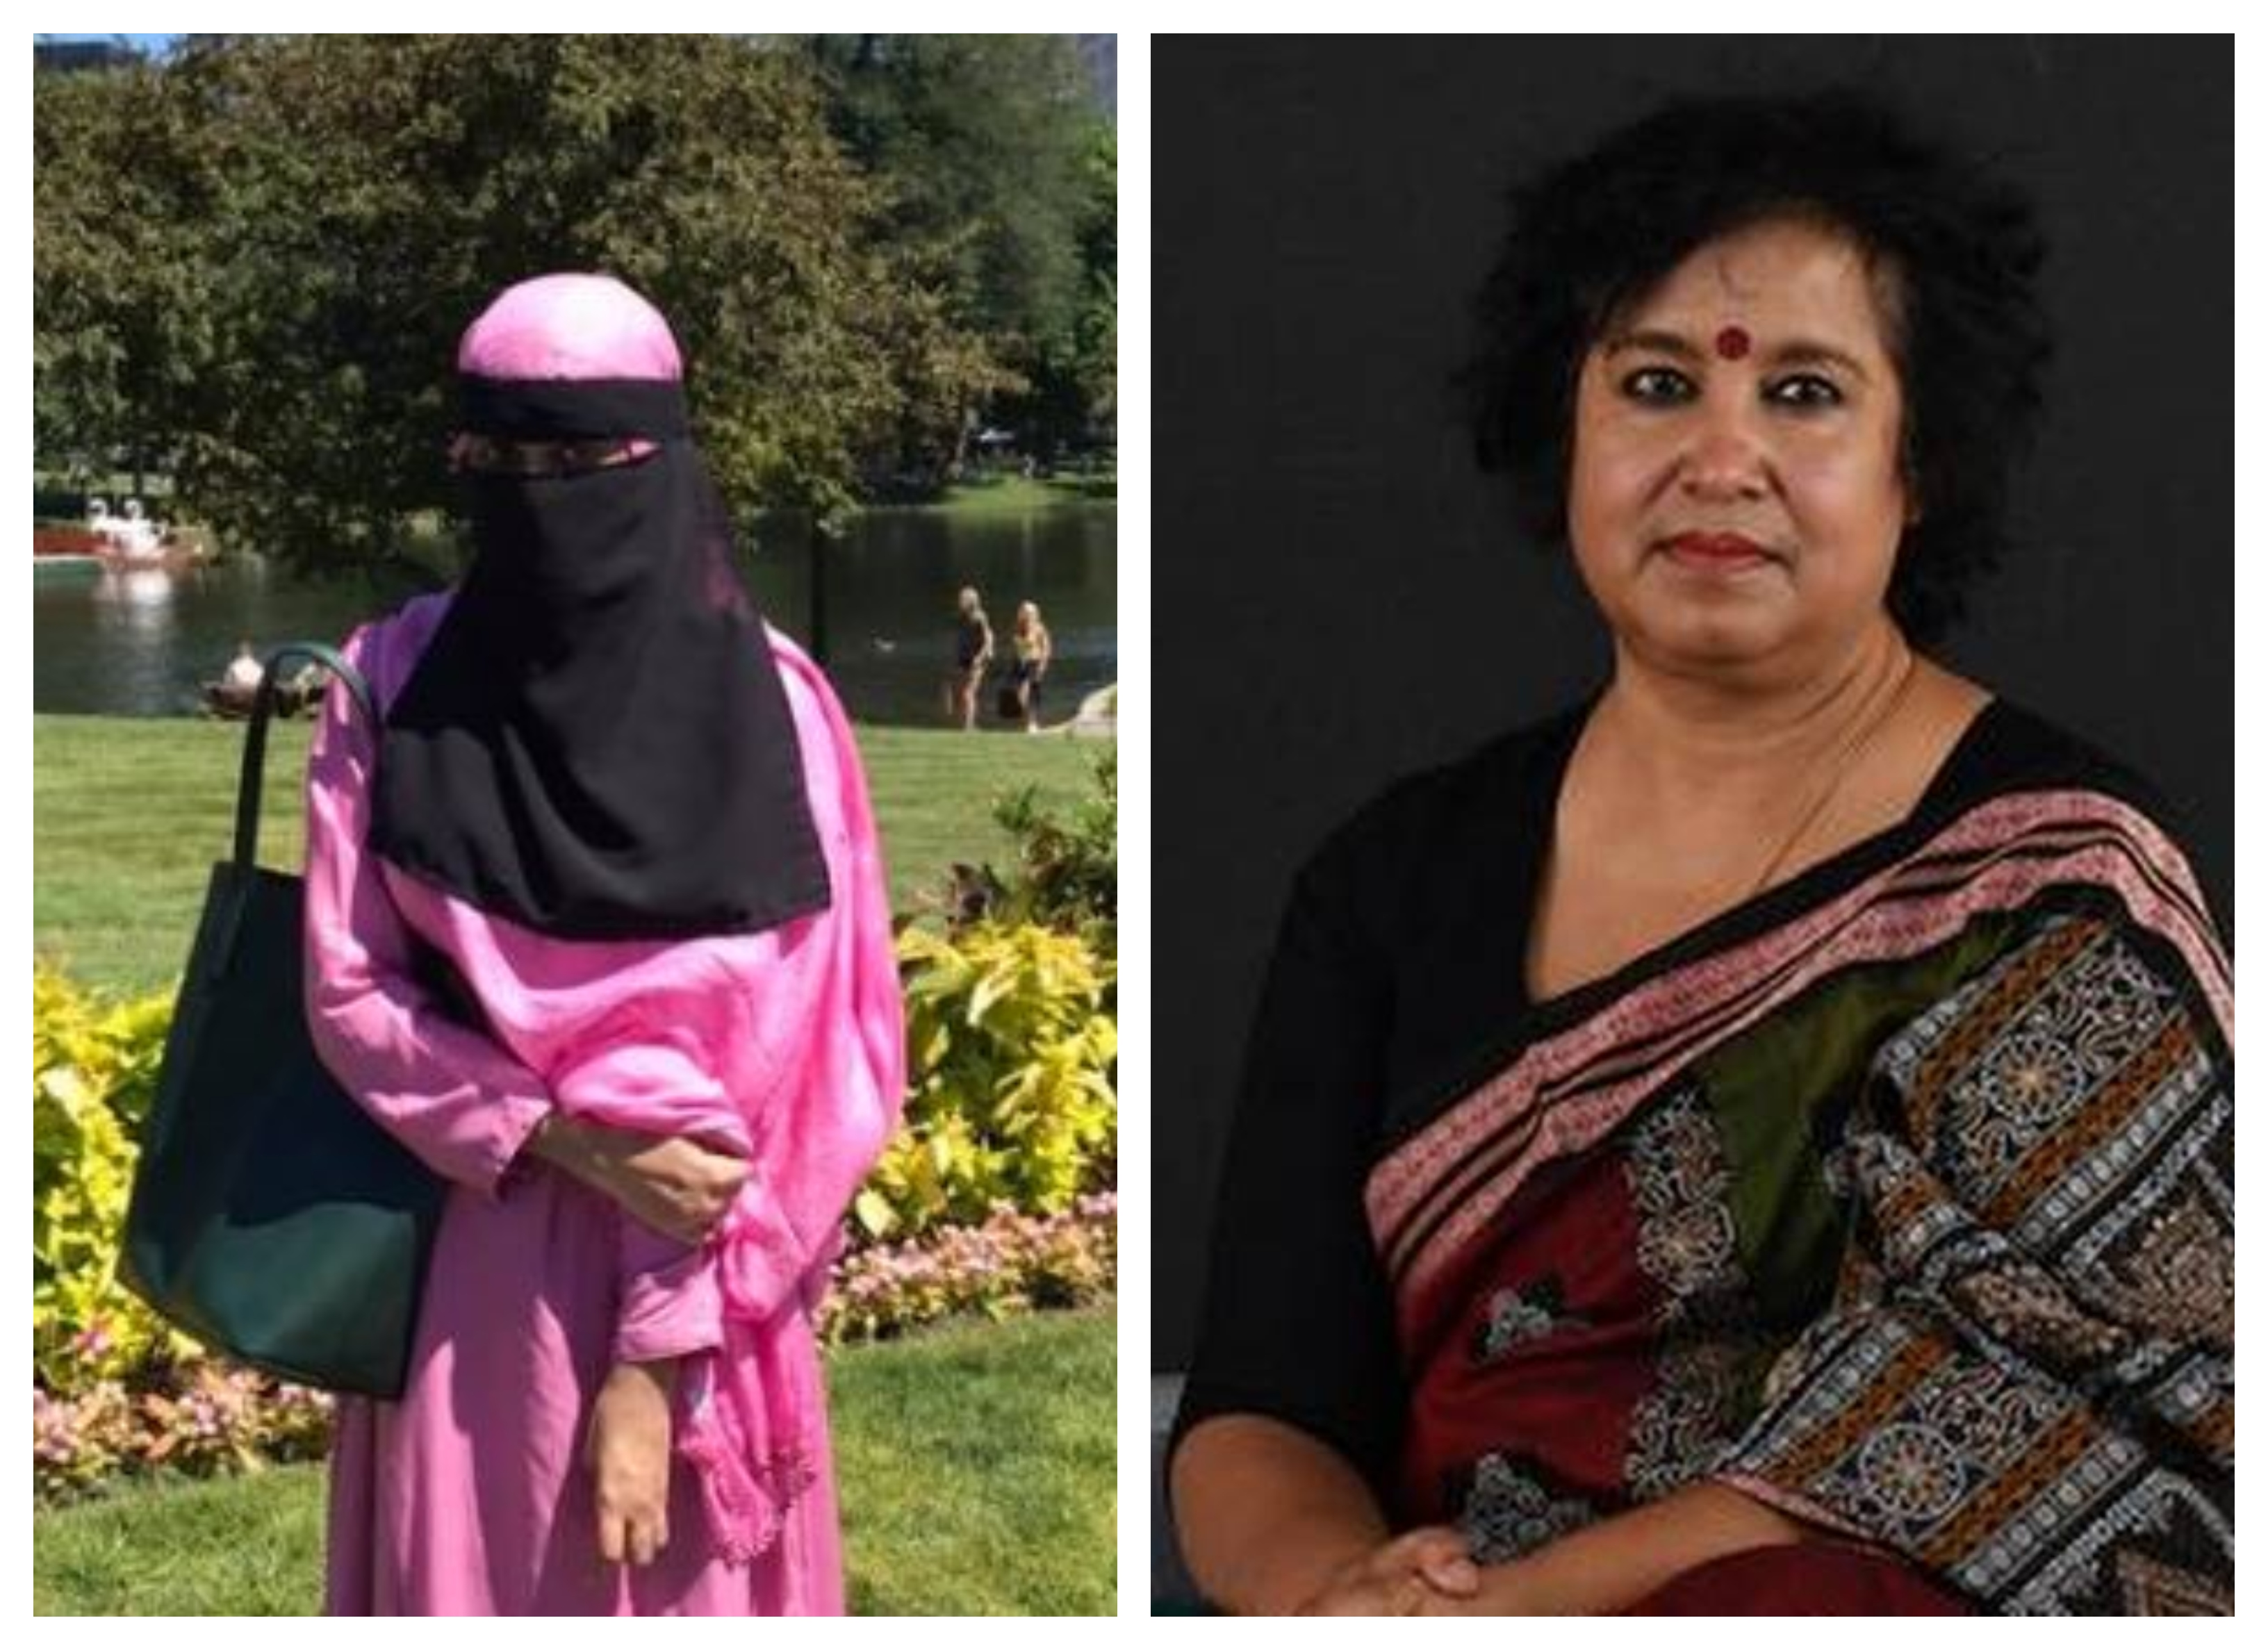 Proud, not suffocated: AR Rahmans daughter on Taslimas burqa jibe